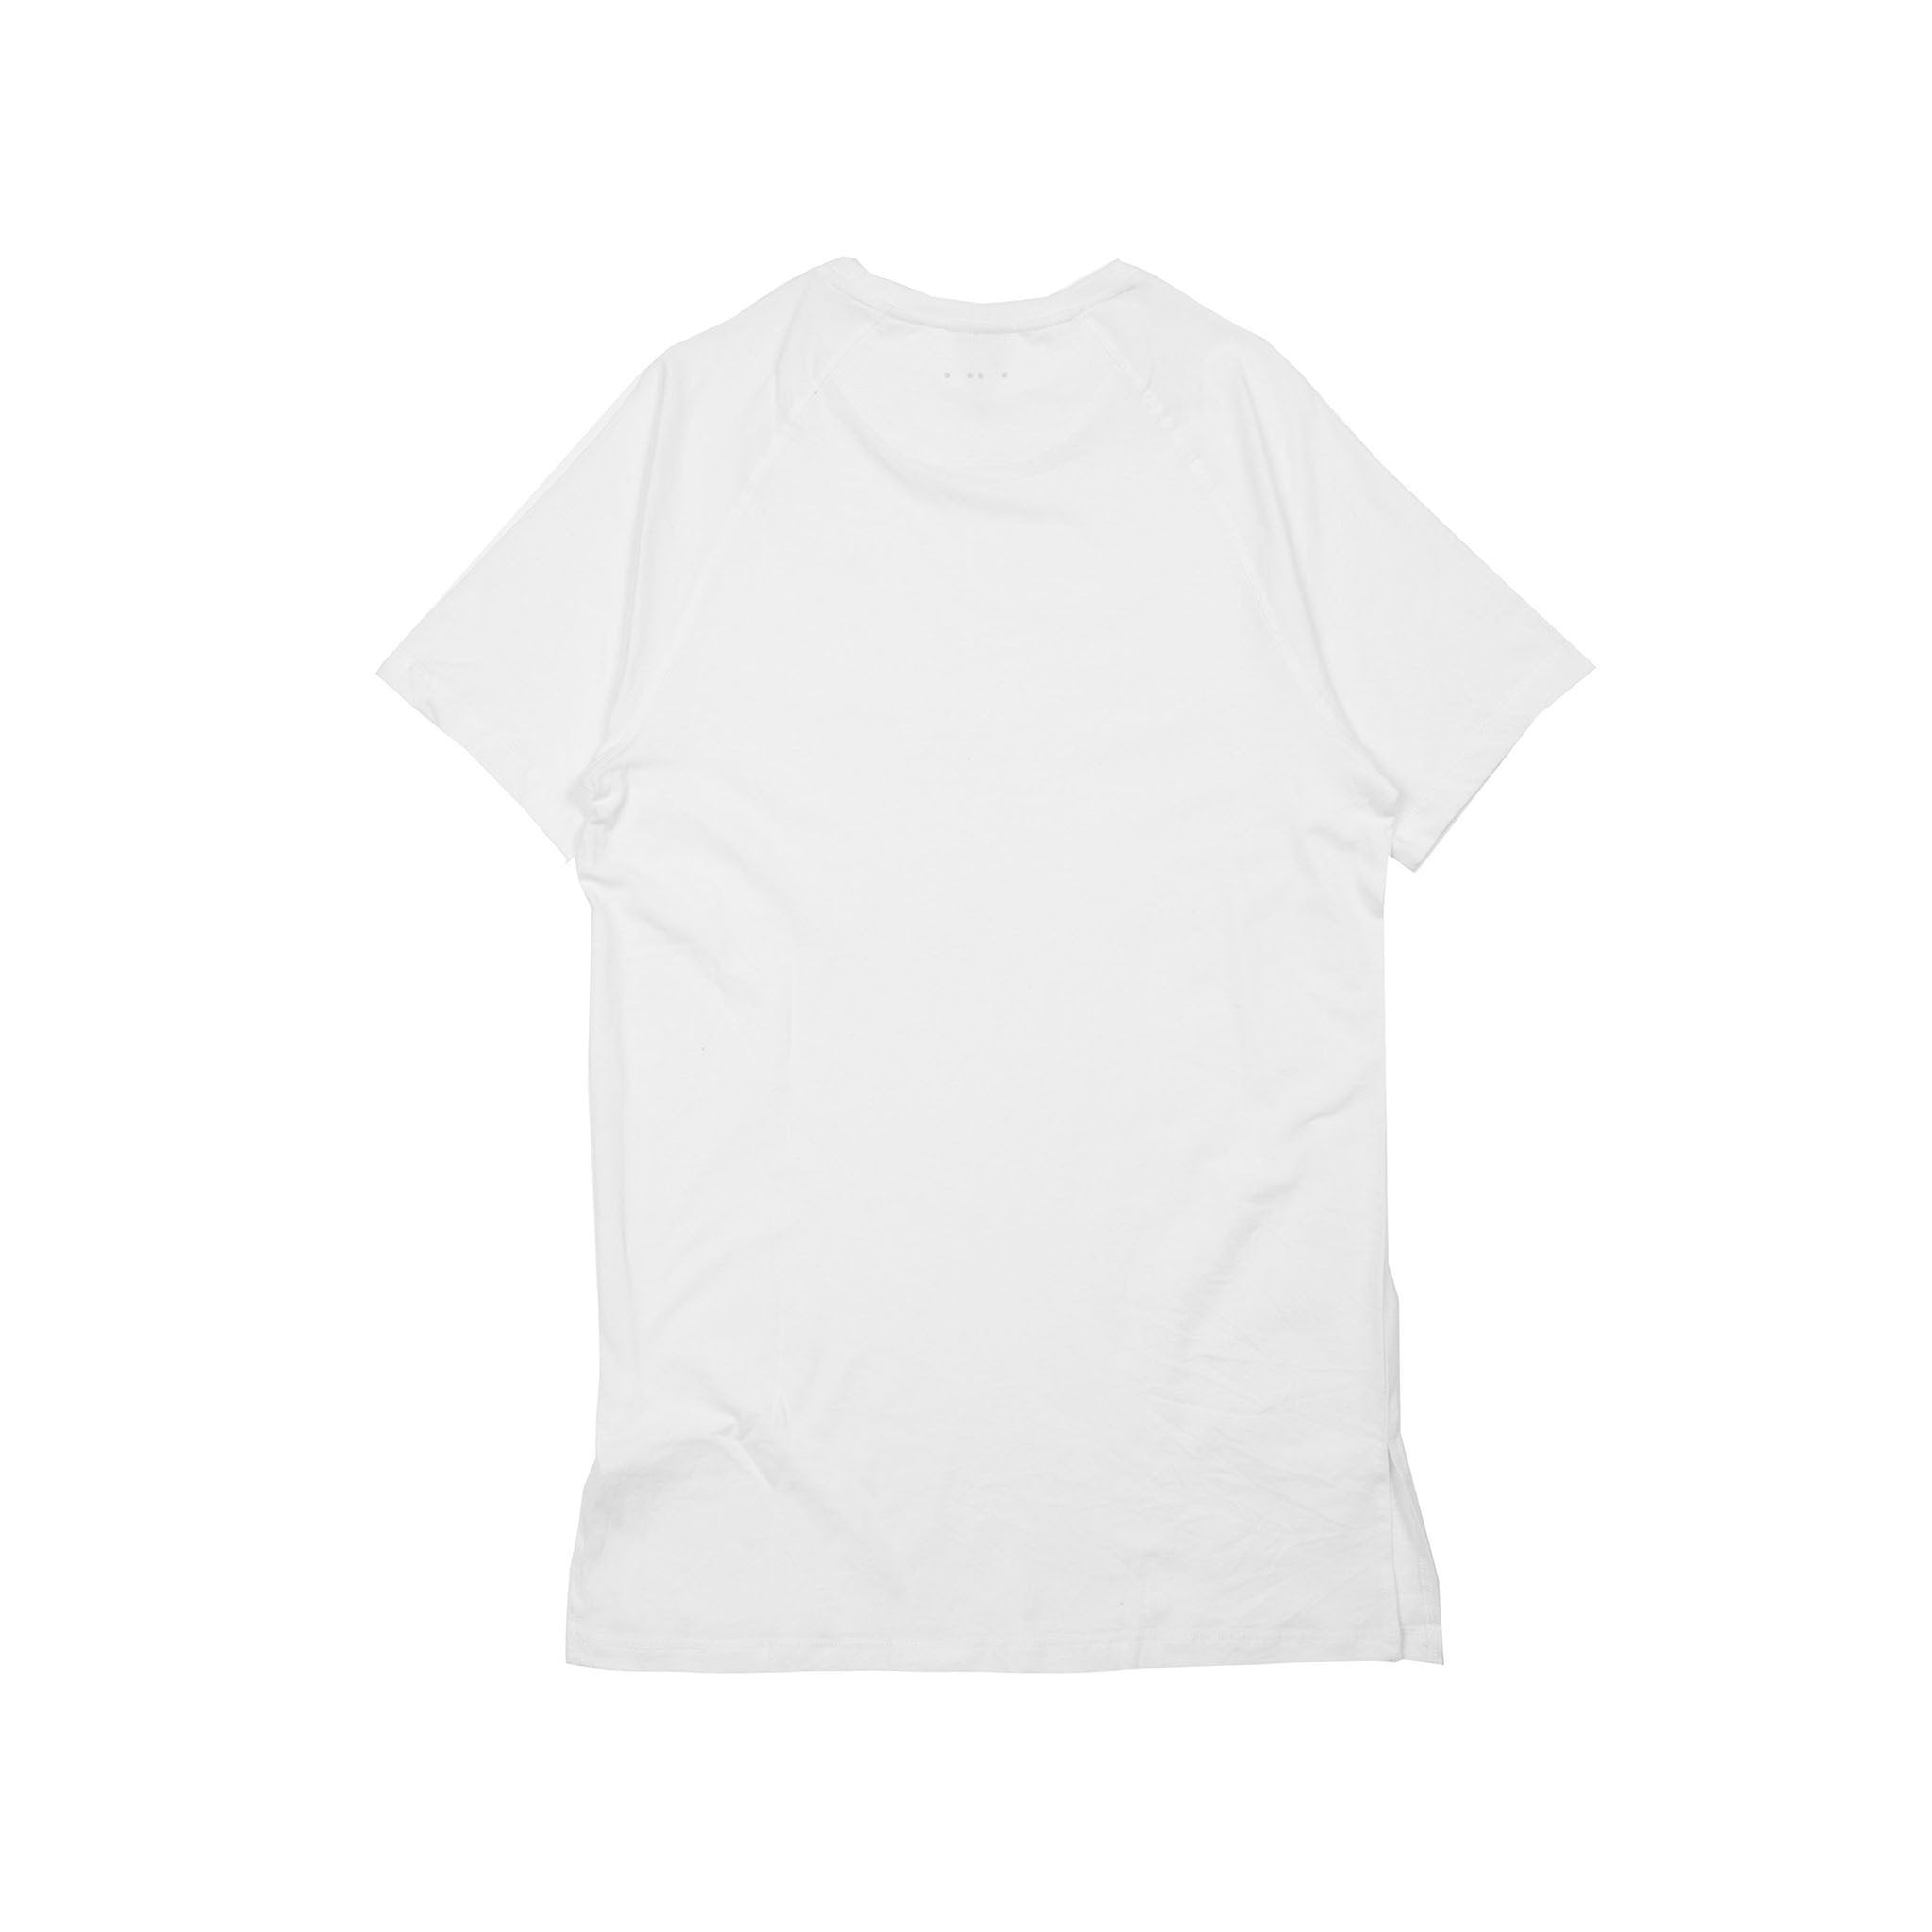 CLOTHING - Publish Penstall Top White P1403063-WHT